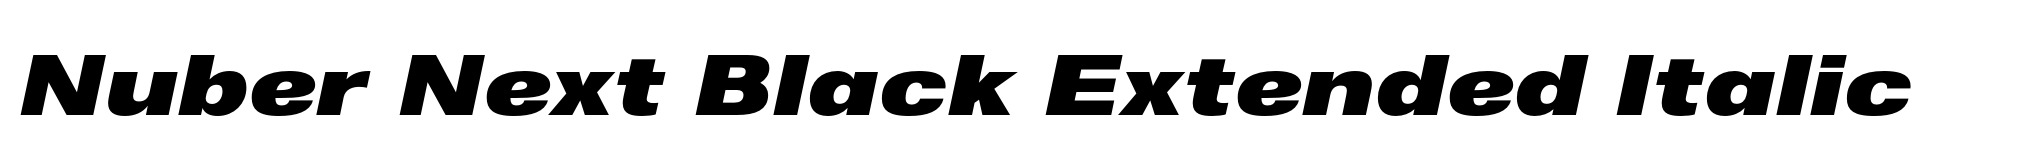 Nuber Next Black Extended Italic image